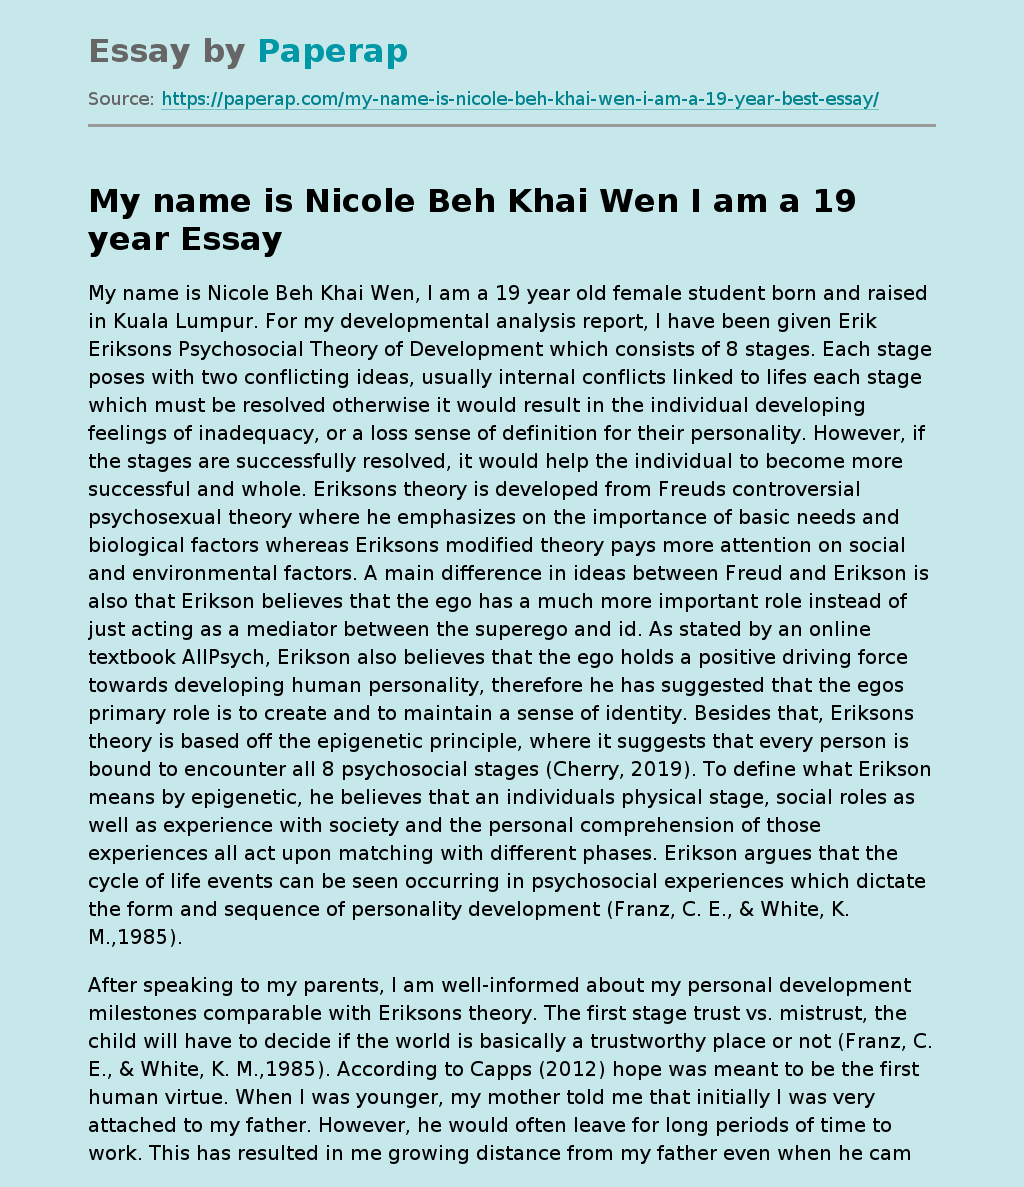 My name is Nicole Beh Khai Wen I am a 19 year